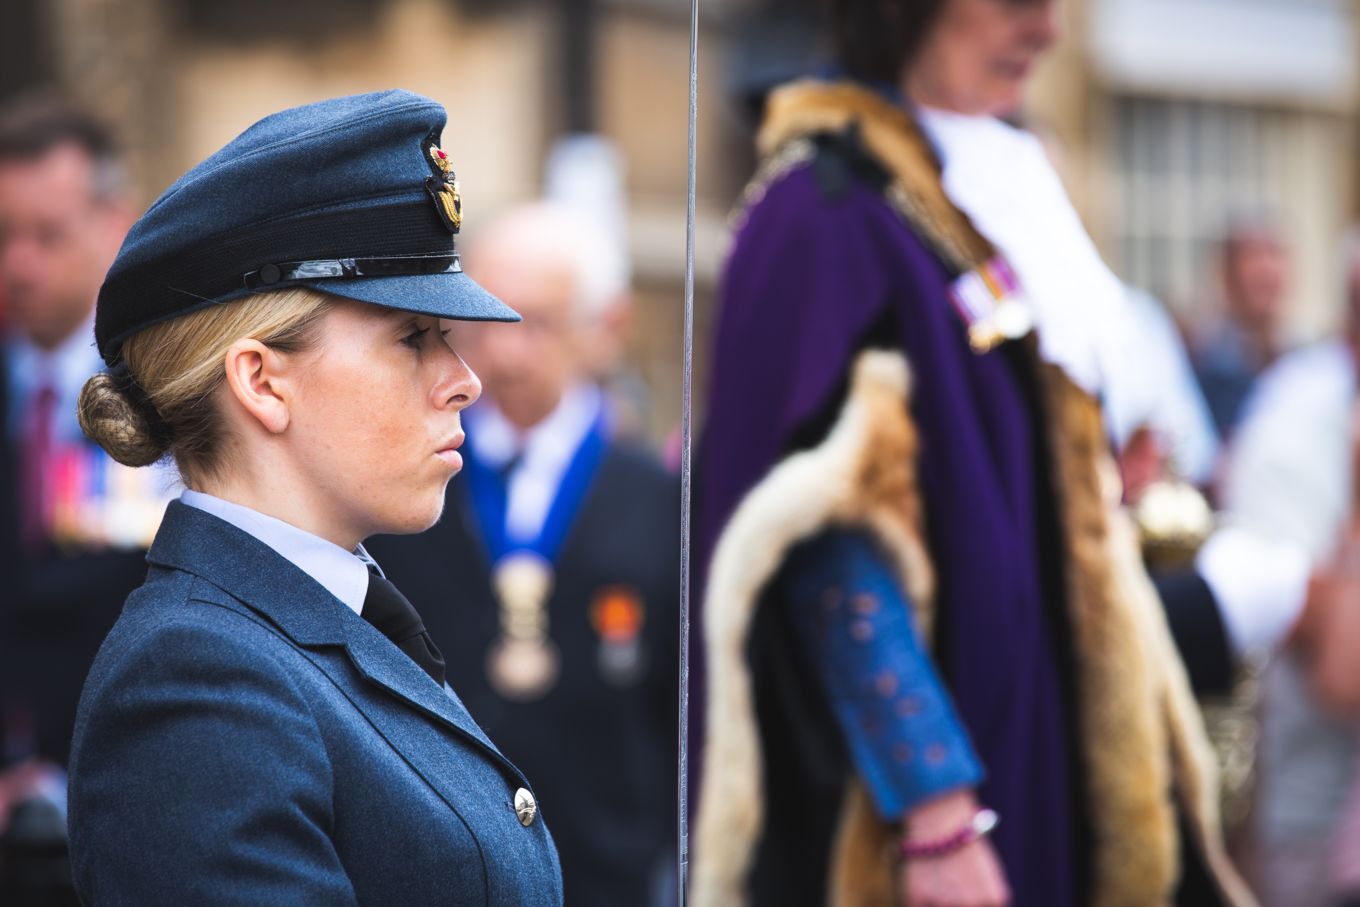 Flt Lt Alice McGrath with the RAF Sword of Freedom